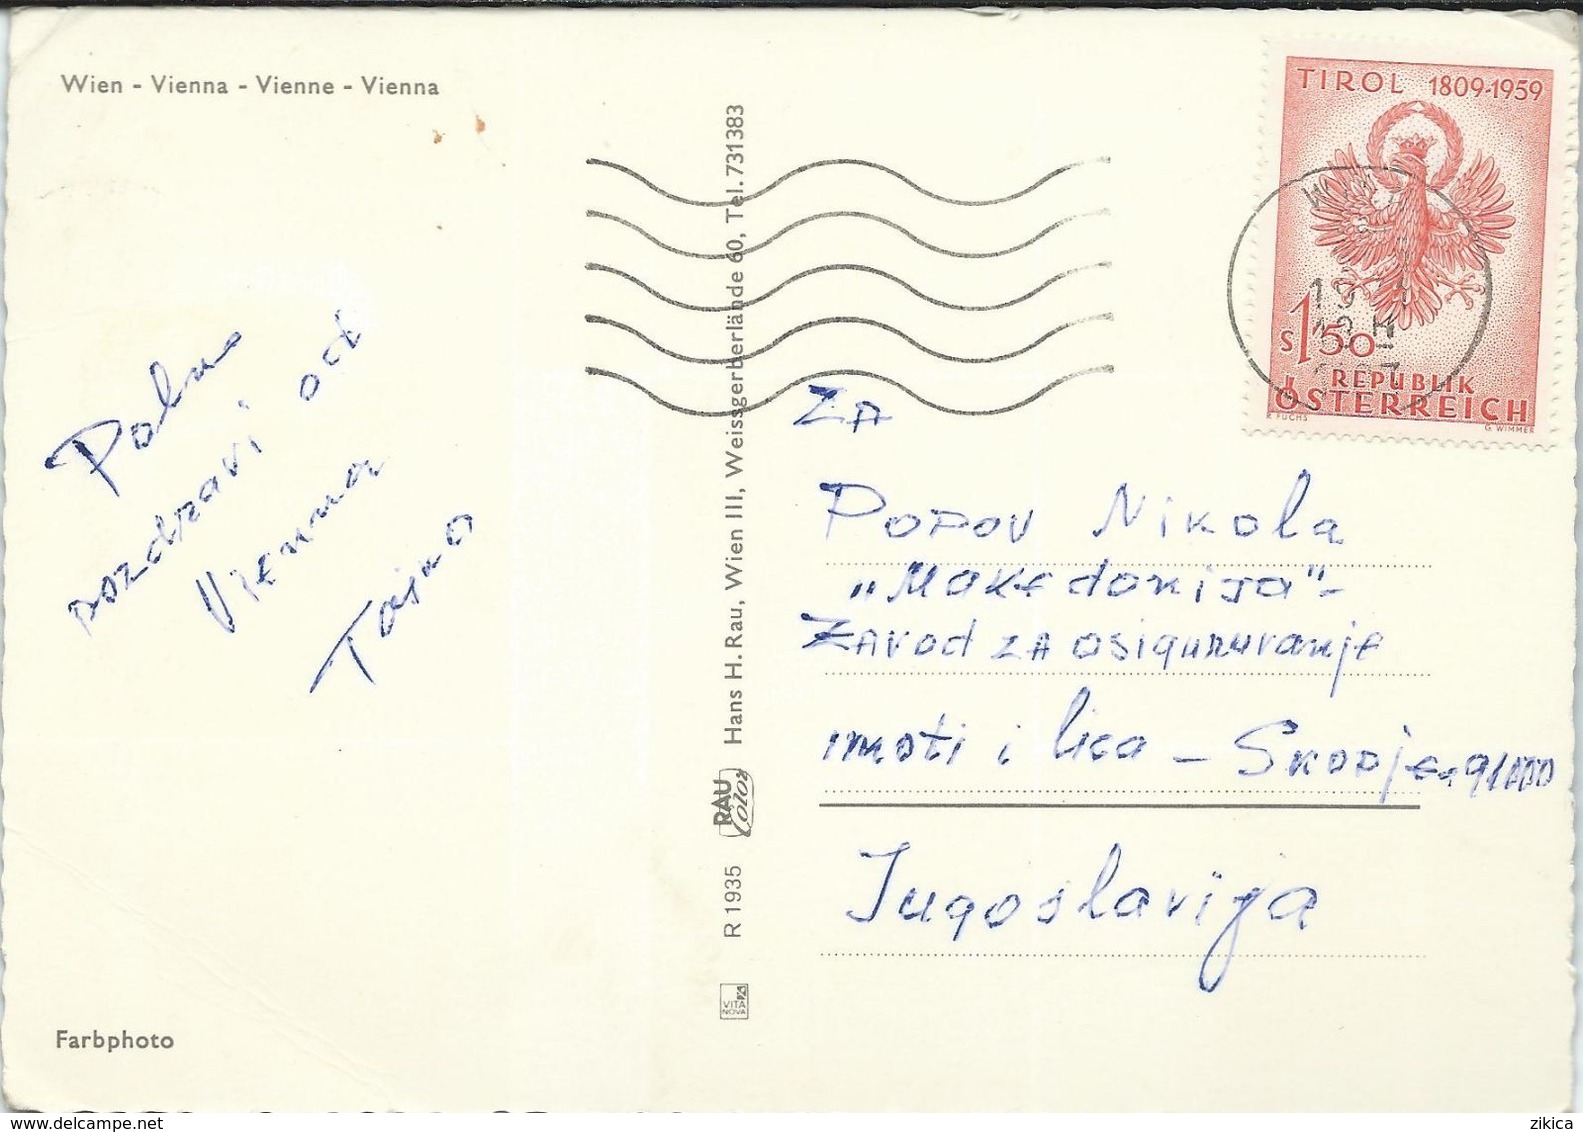 Austria > Vienna Via Macedonia,nice Stamp 1959 - Vienna Center